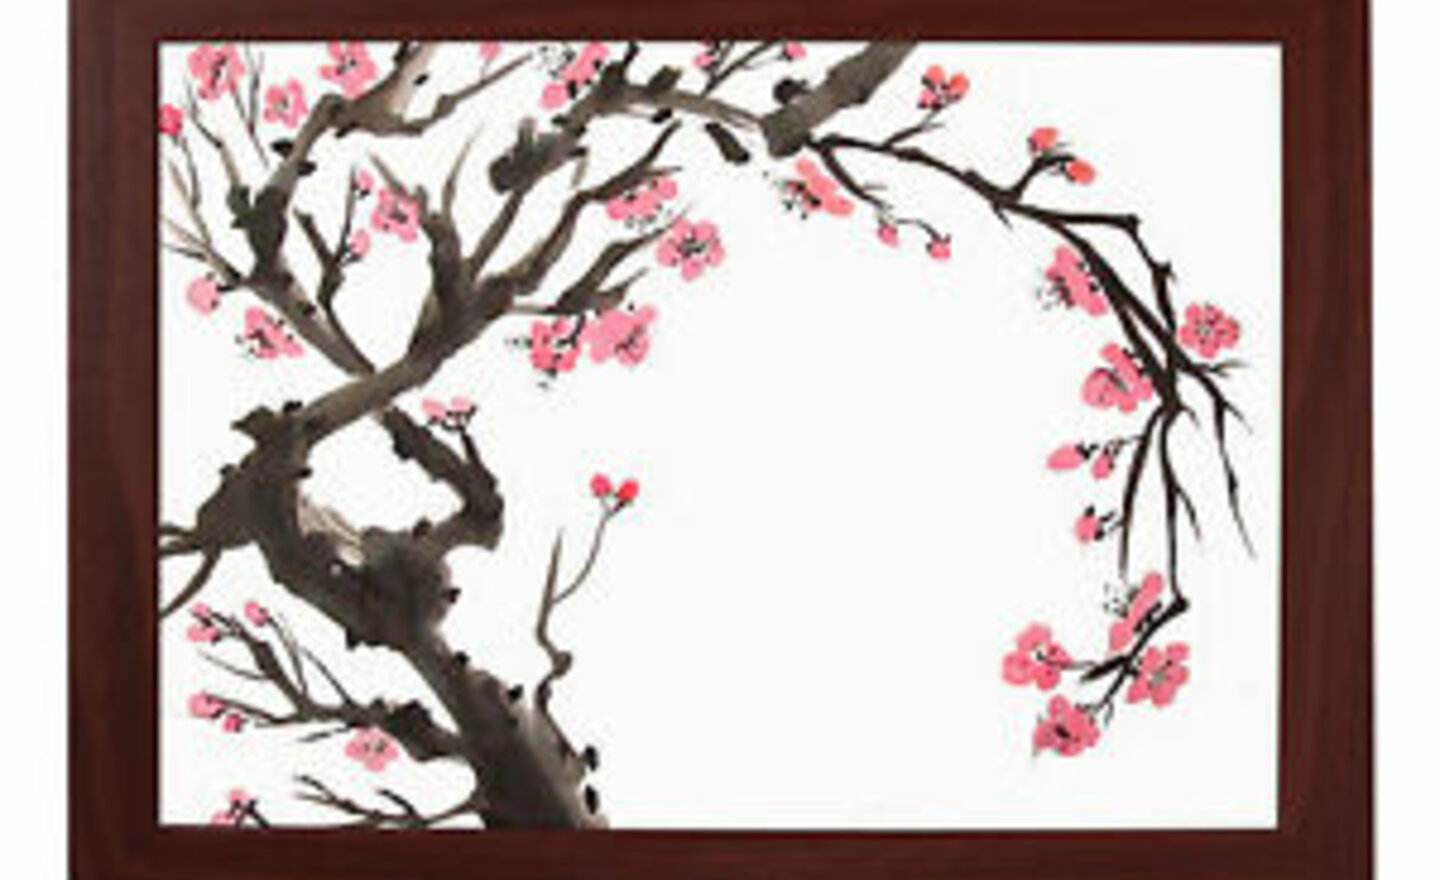 Image of Cherry Blossom Trees